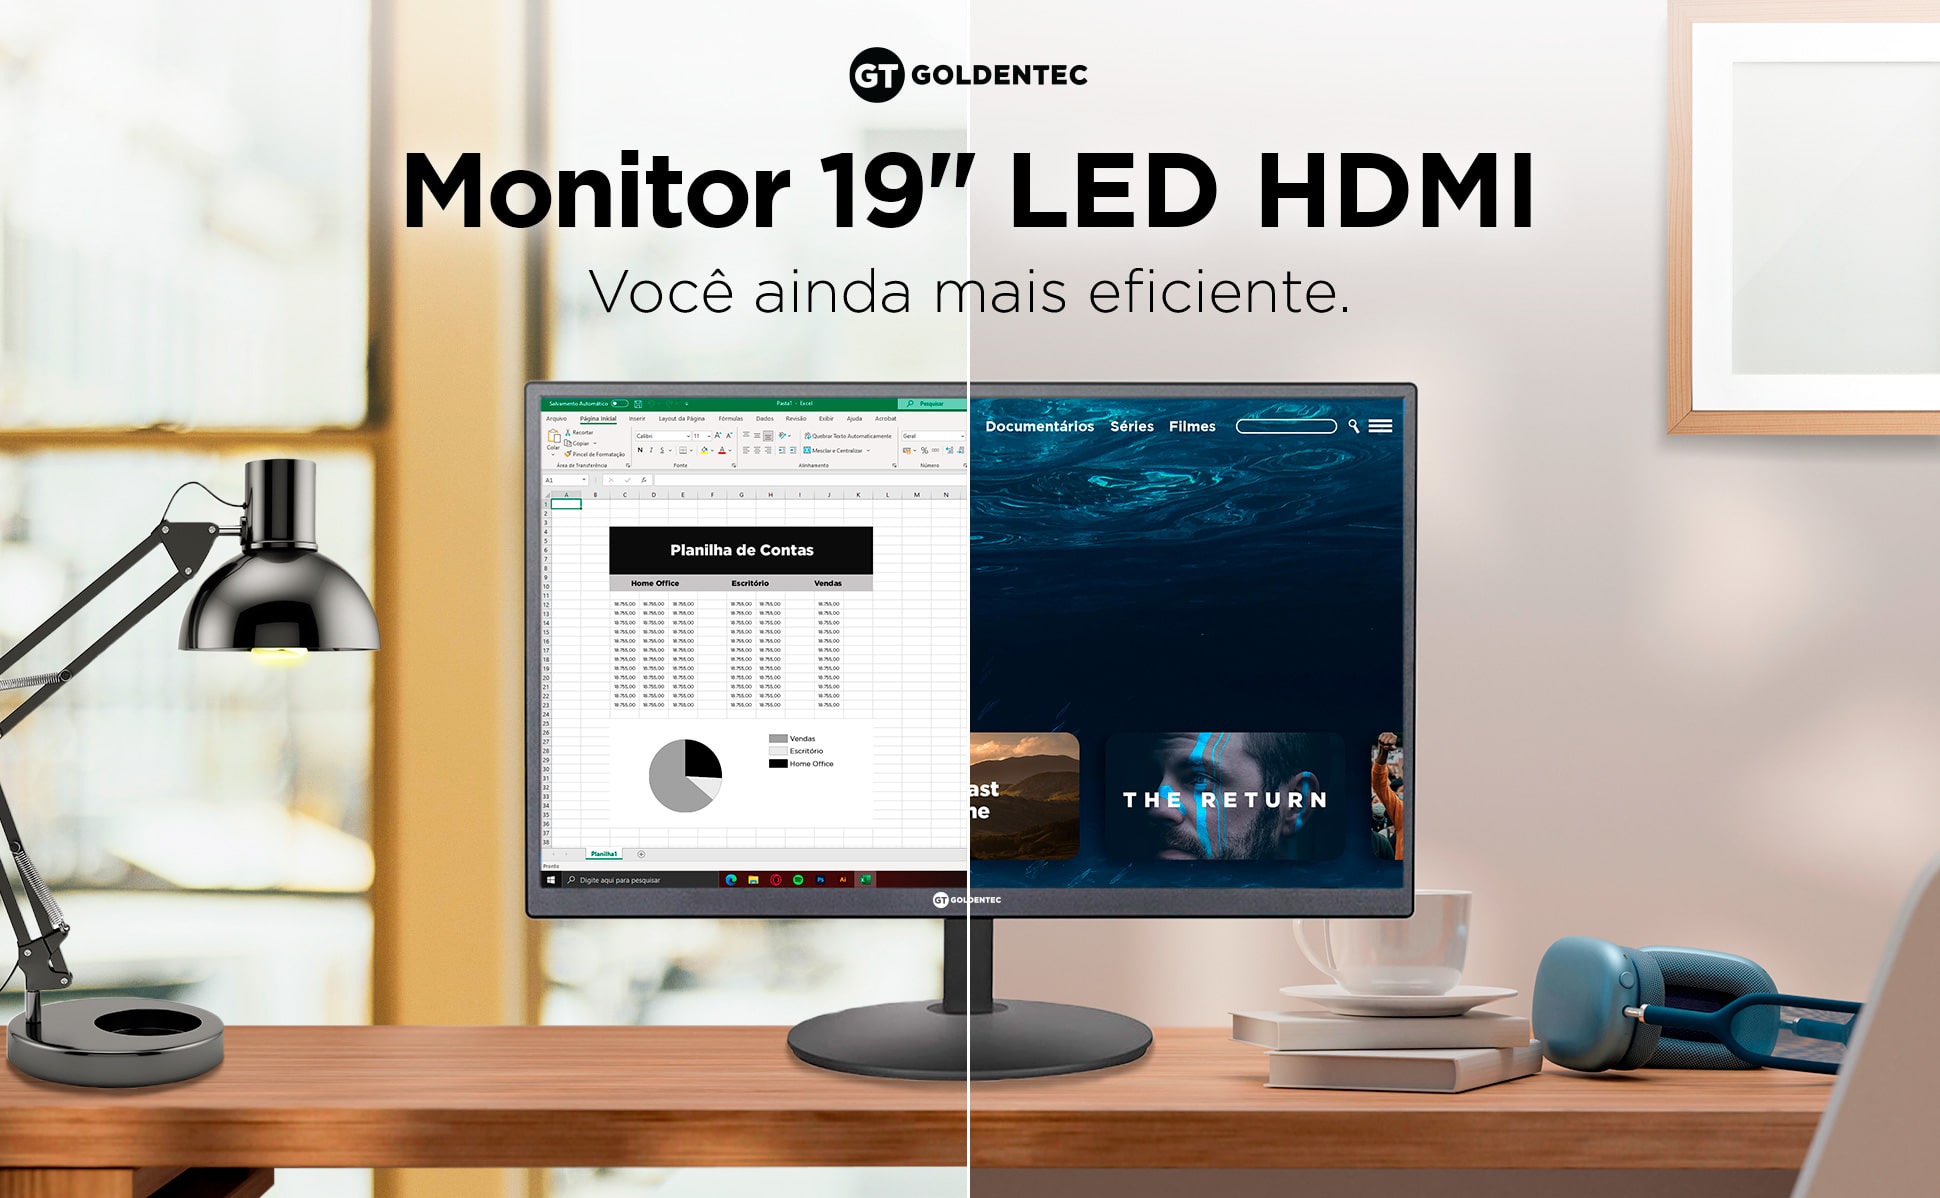 Monitor 19 LED HDMI Goldentec